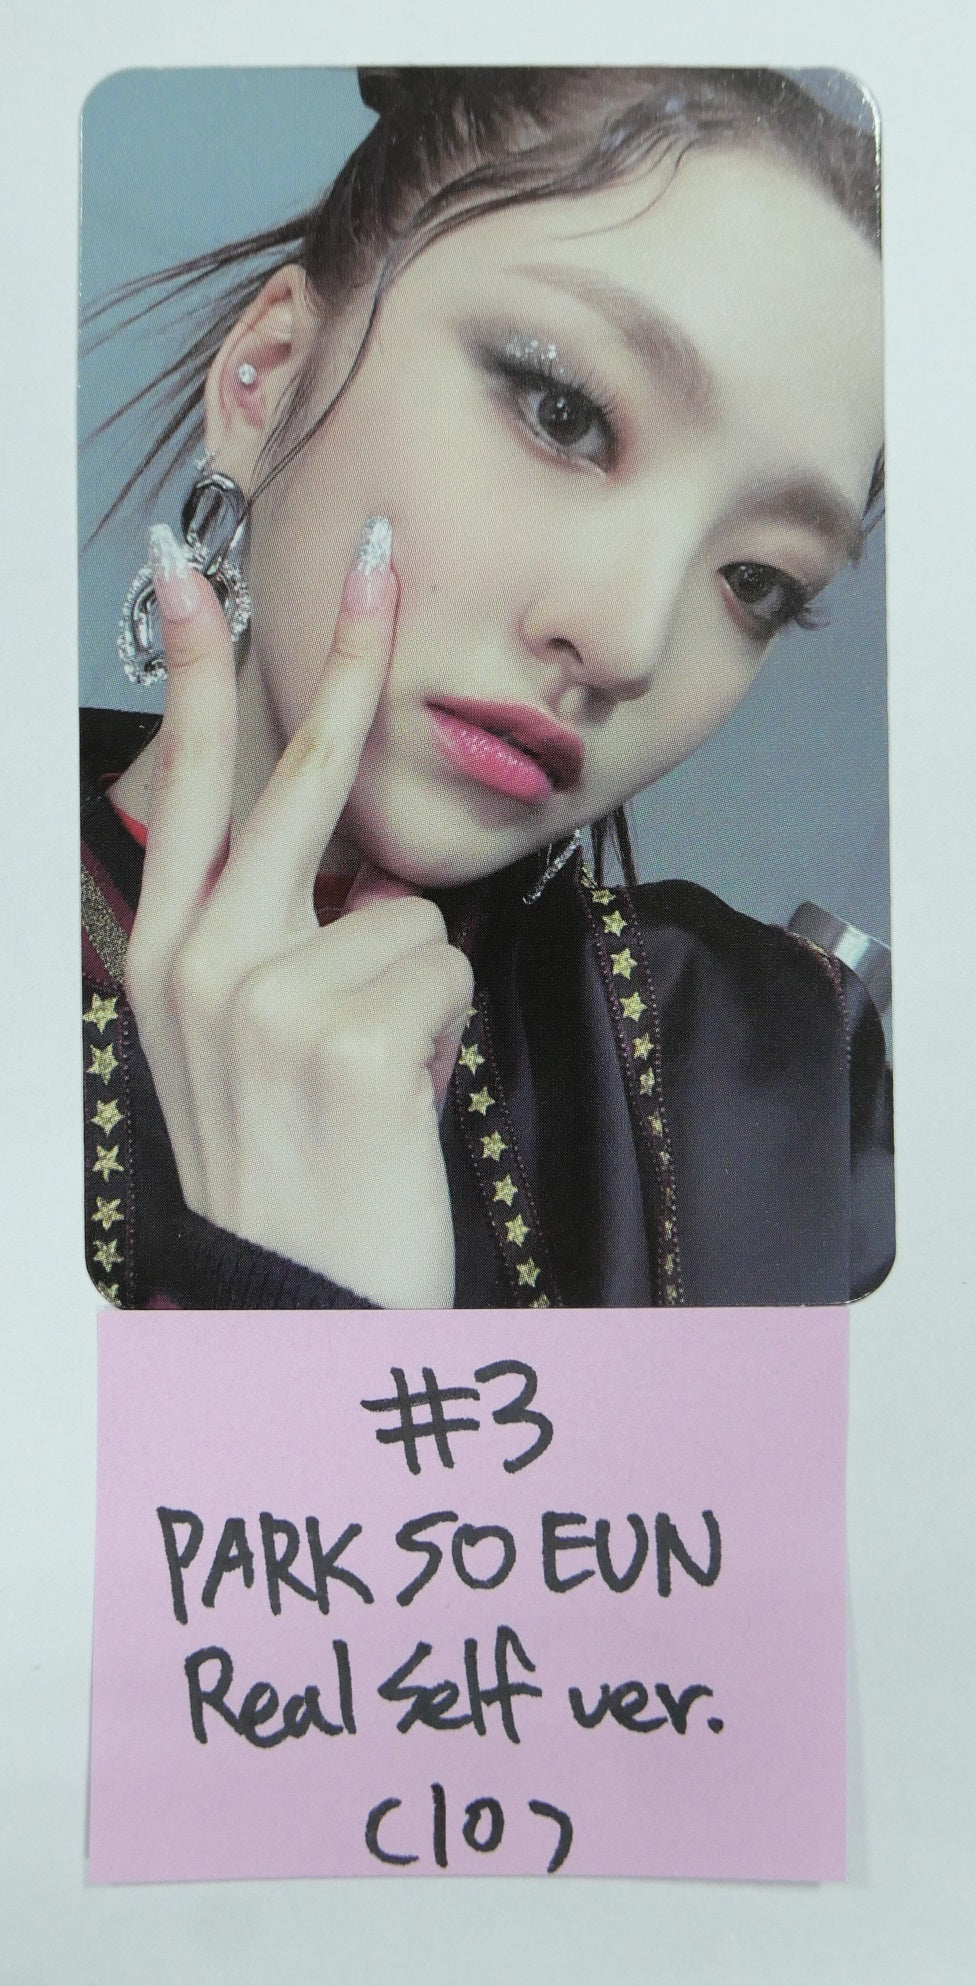 Weeekly "Play Game : AWAKE" - Official Photocard [Monday, Park so eun]